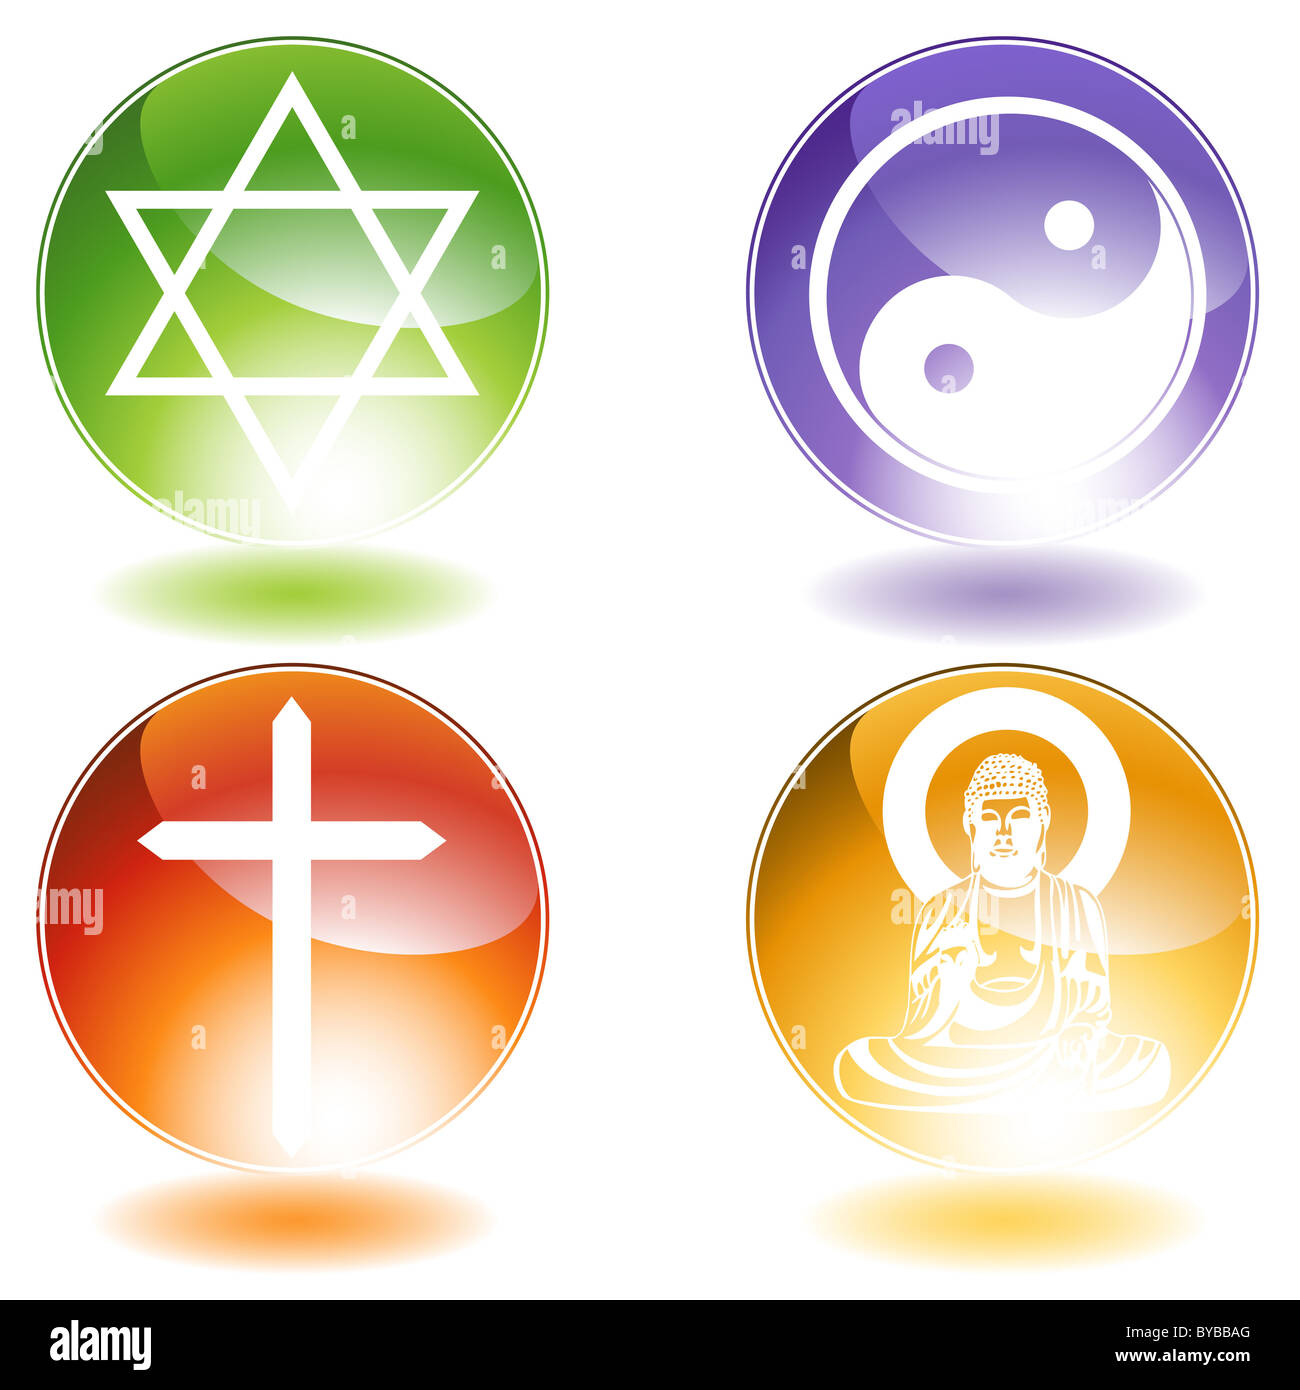 Set of 4 religious symbols. Stock Photo